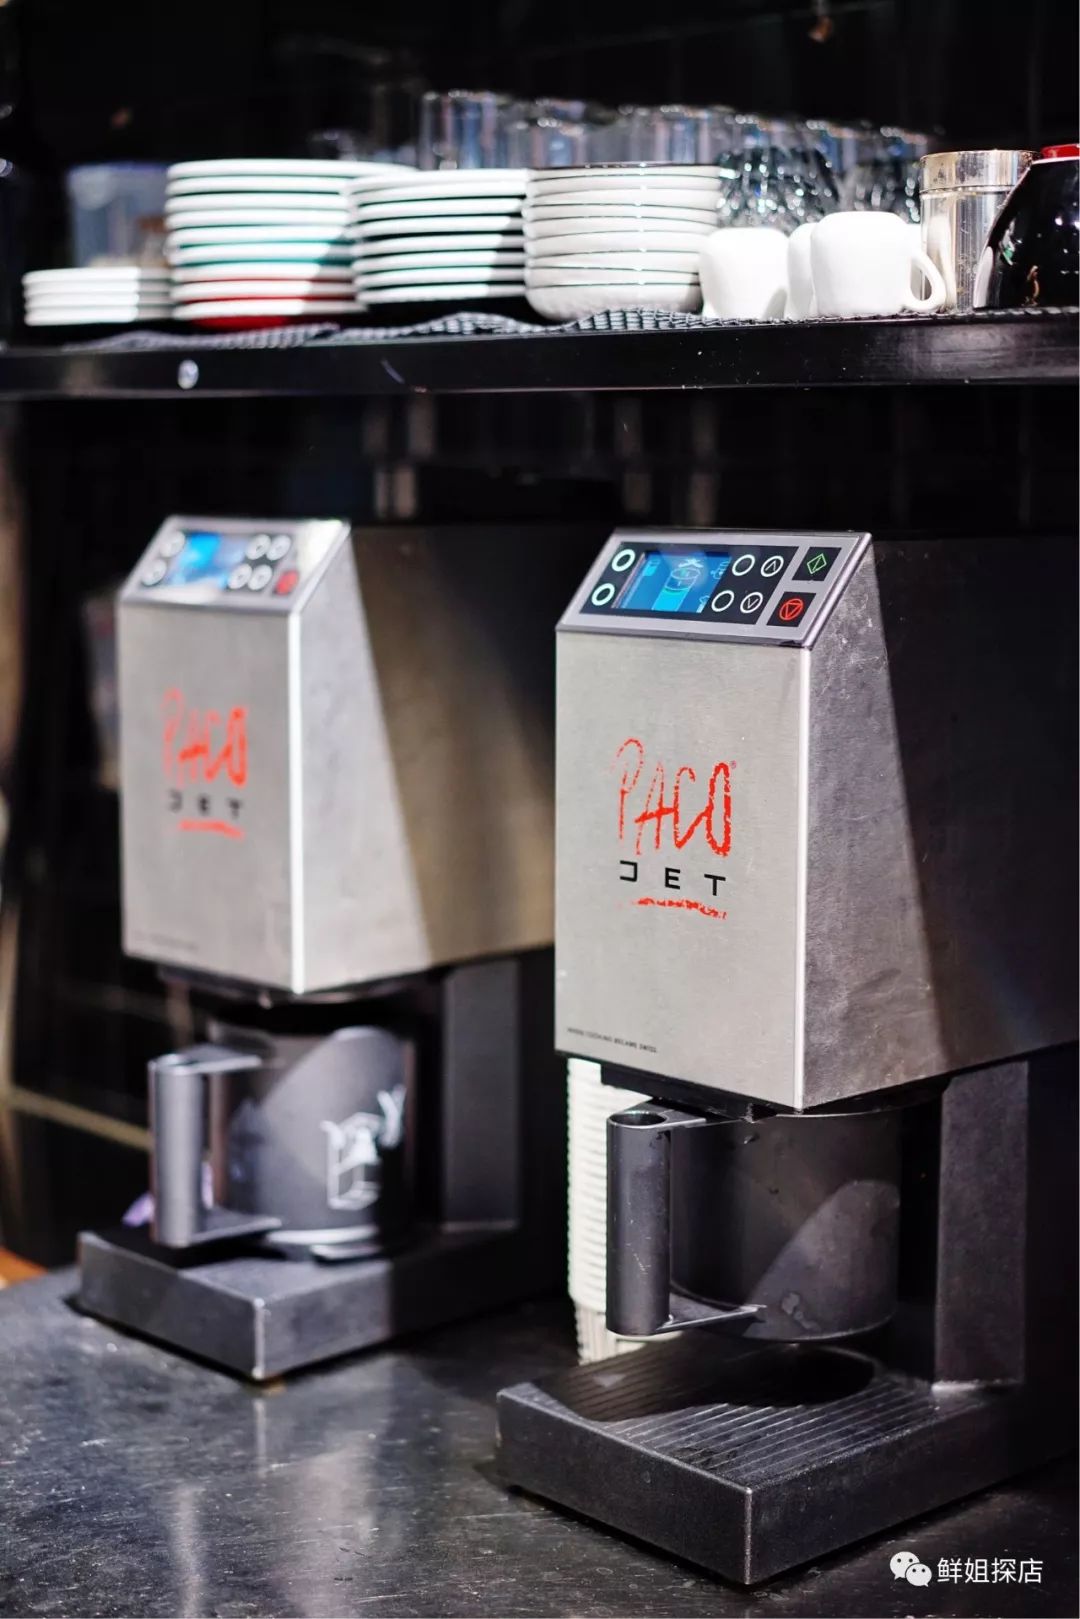 "paco jet"制作,这台冰淇淋机更是米其林餐厅和分子料理里的常用机器!